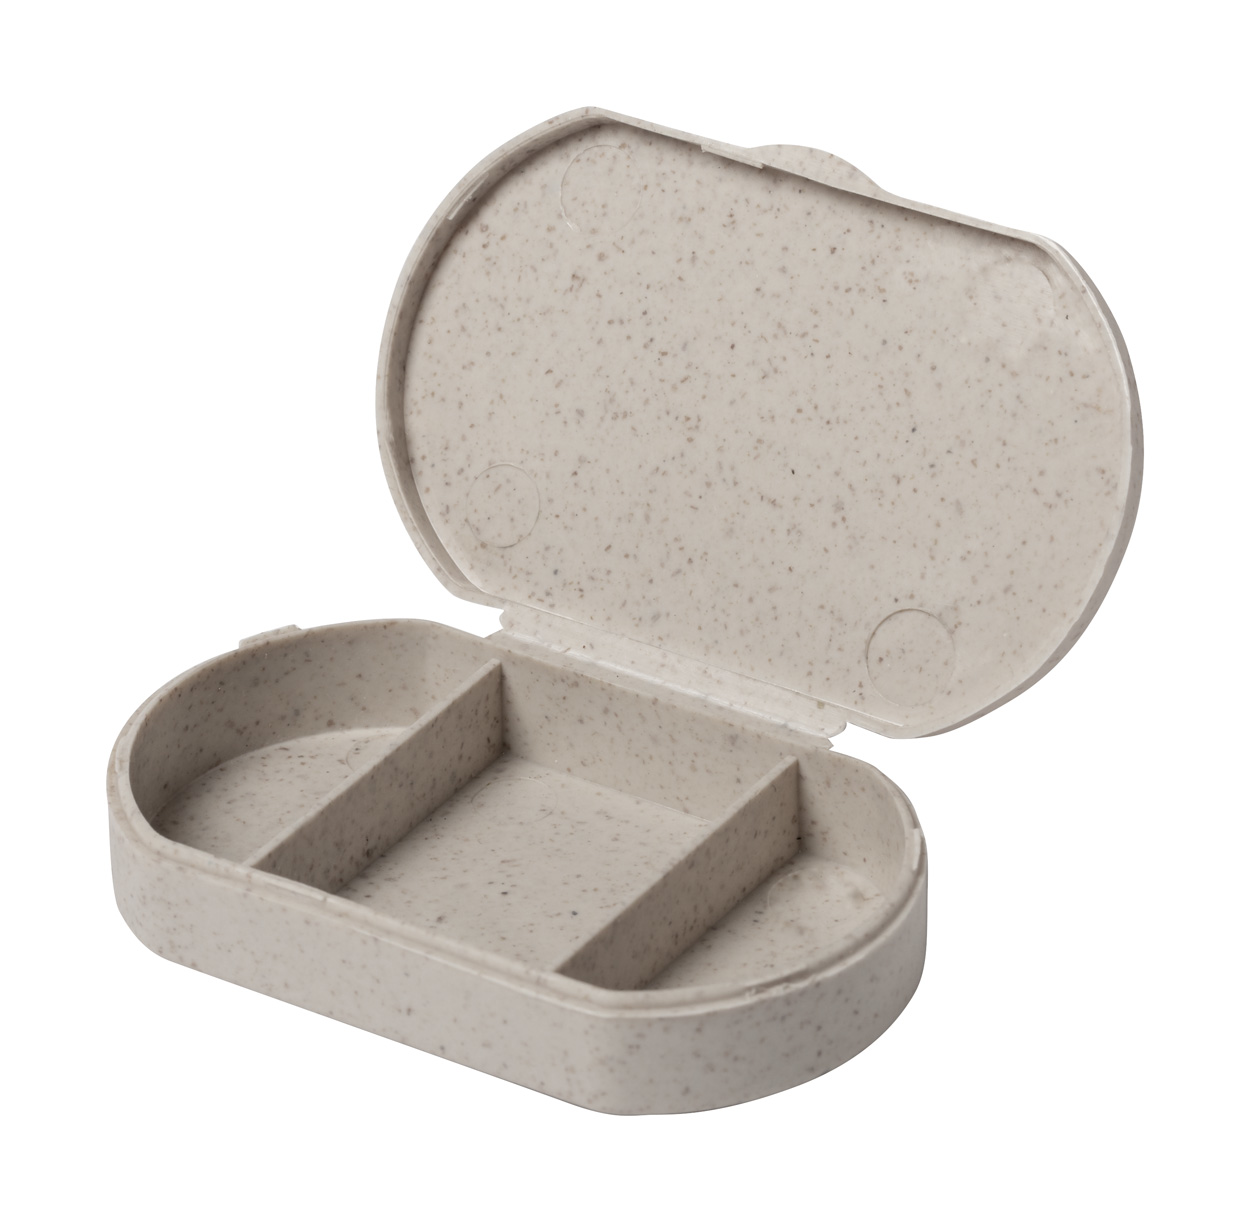 Varsum pillbox